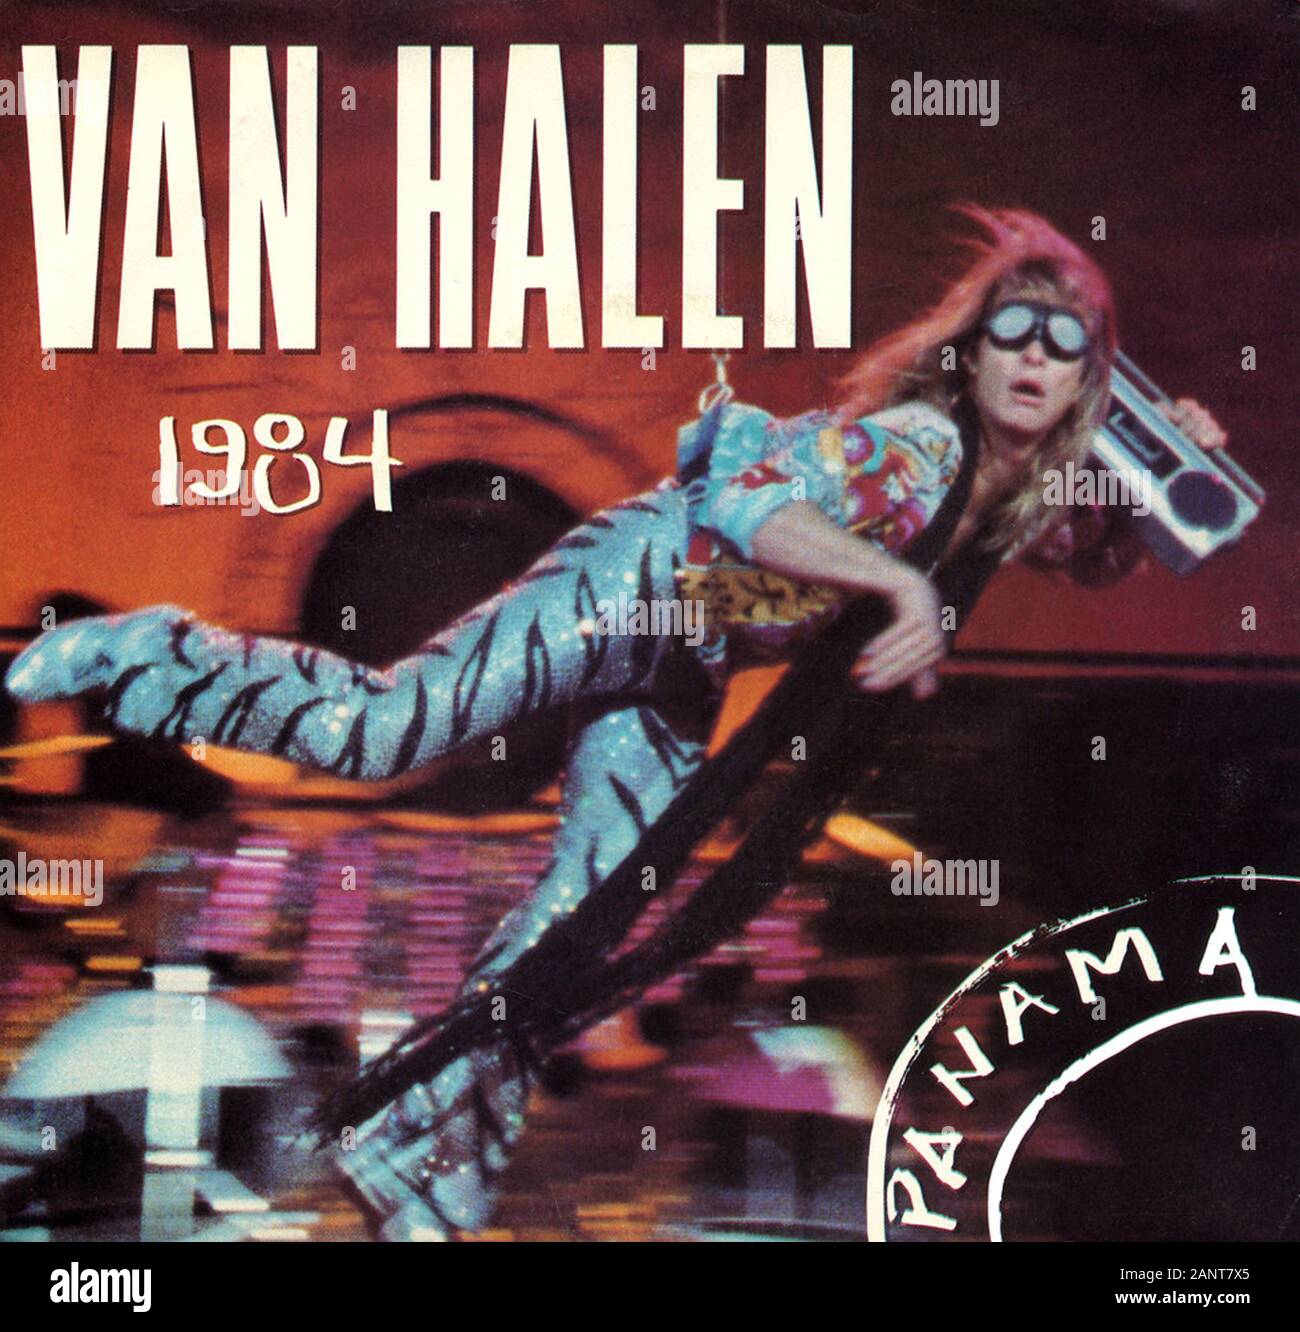 Van Halen - Panama - Classic vintage vinyl album Stock Photo - Alamy